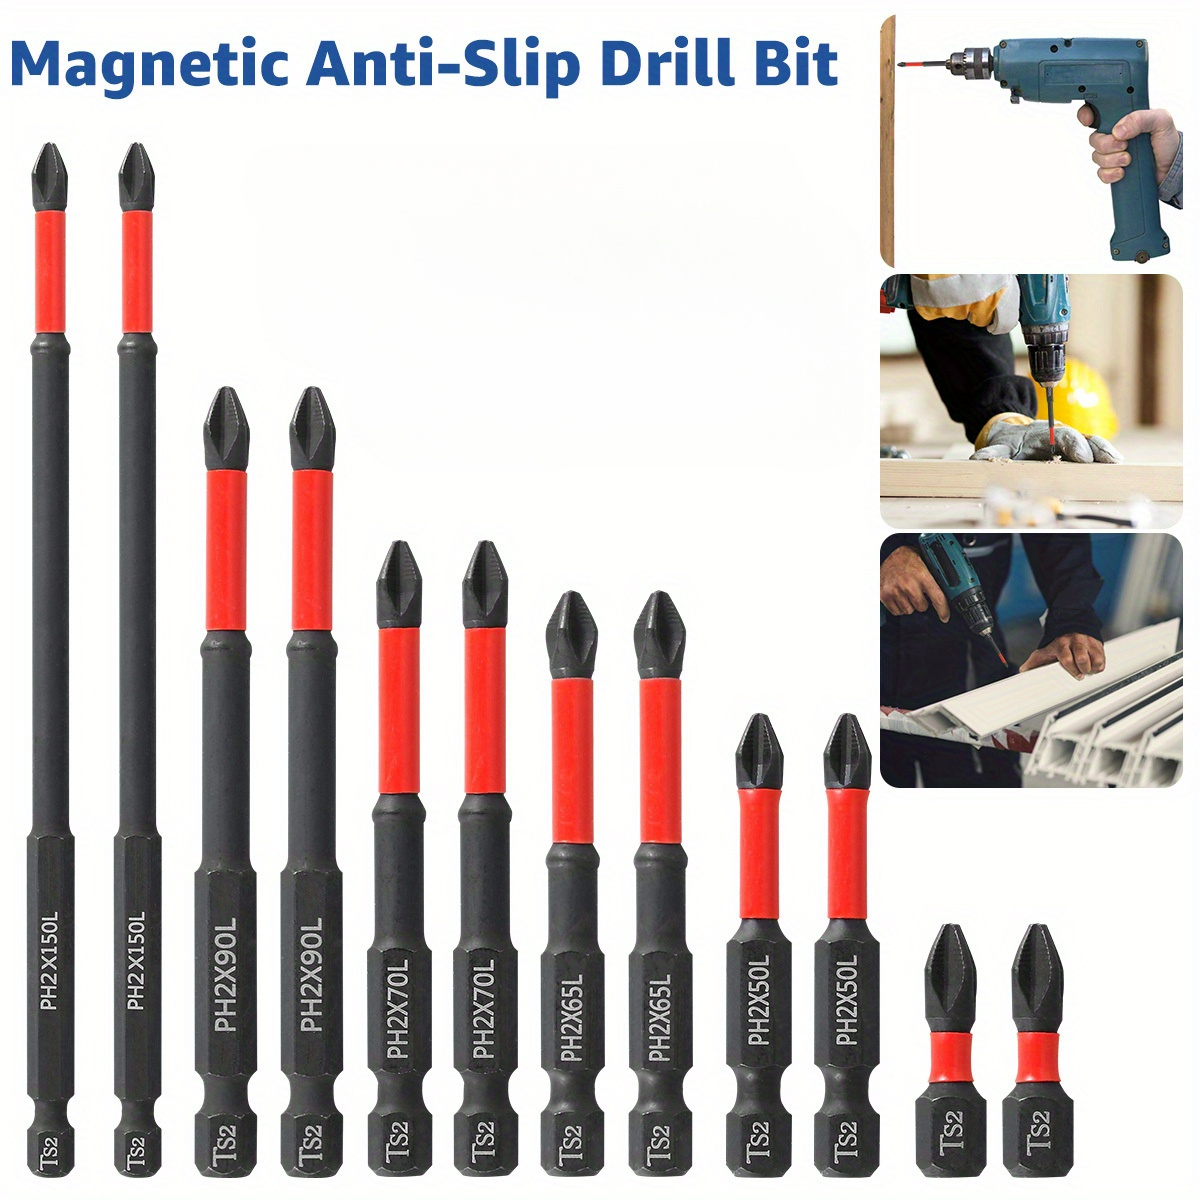 

12-piece Magnetic Screwdriver Bit Set - S2 Steel, 1/4" Shank, Phillips & Impact Bits For Electric & Manual Drivers, Anti-slip Grip